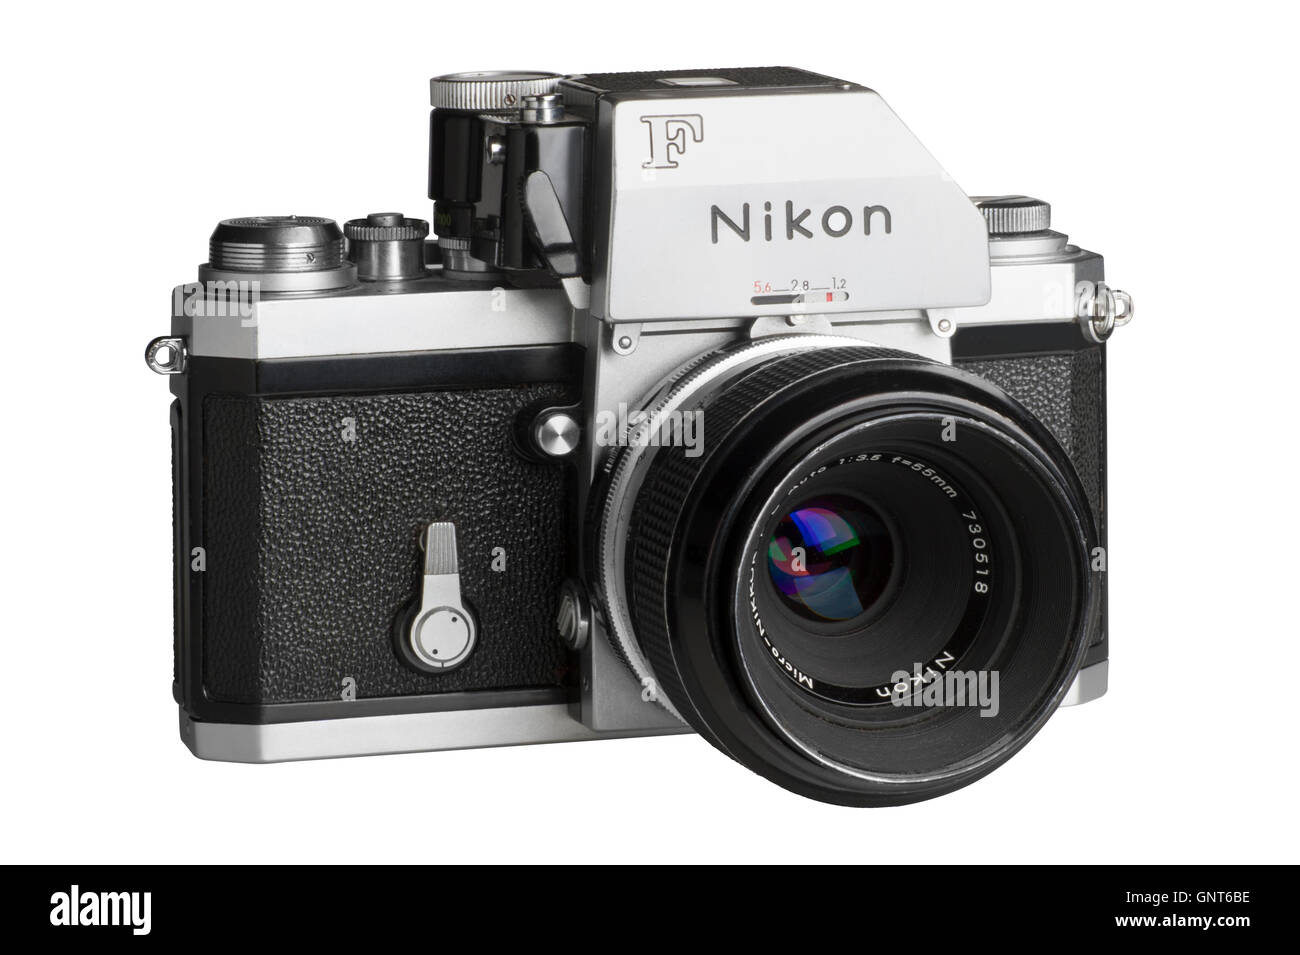 1971 Nikon F mit Photomic FTn Dosierkopf, 55 mm Micro-Nikkor angebracht.  Direkt gegenüber Stockfoto